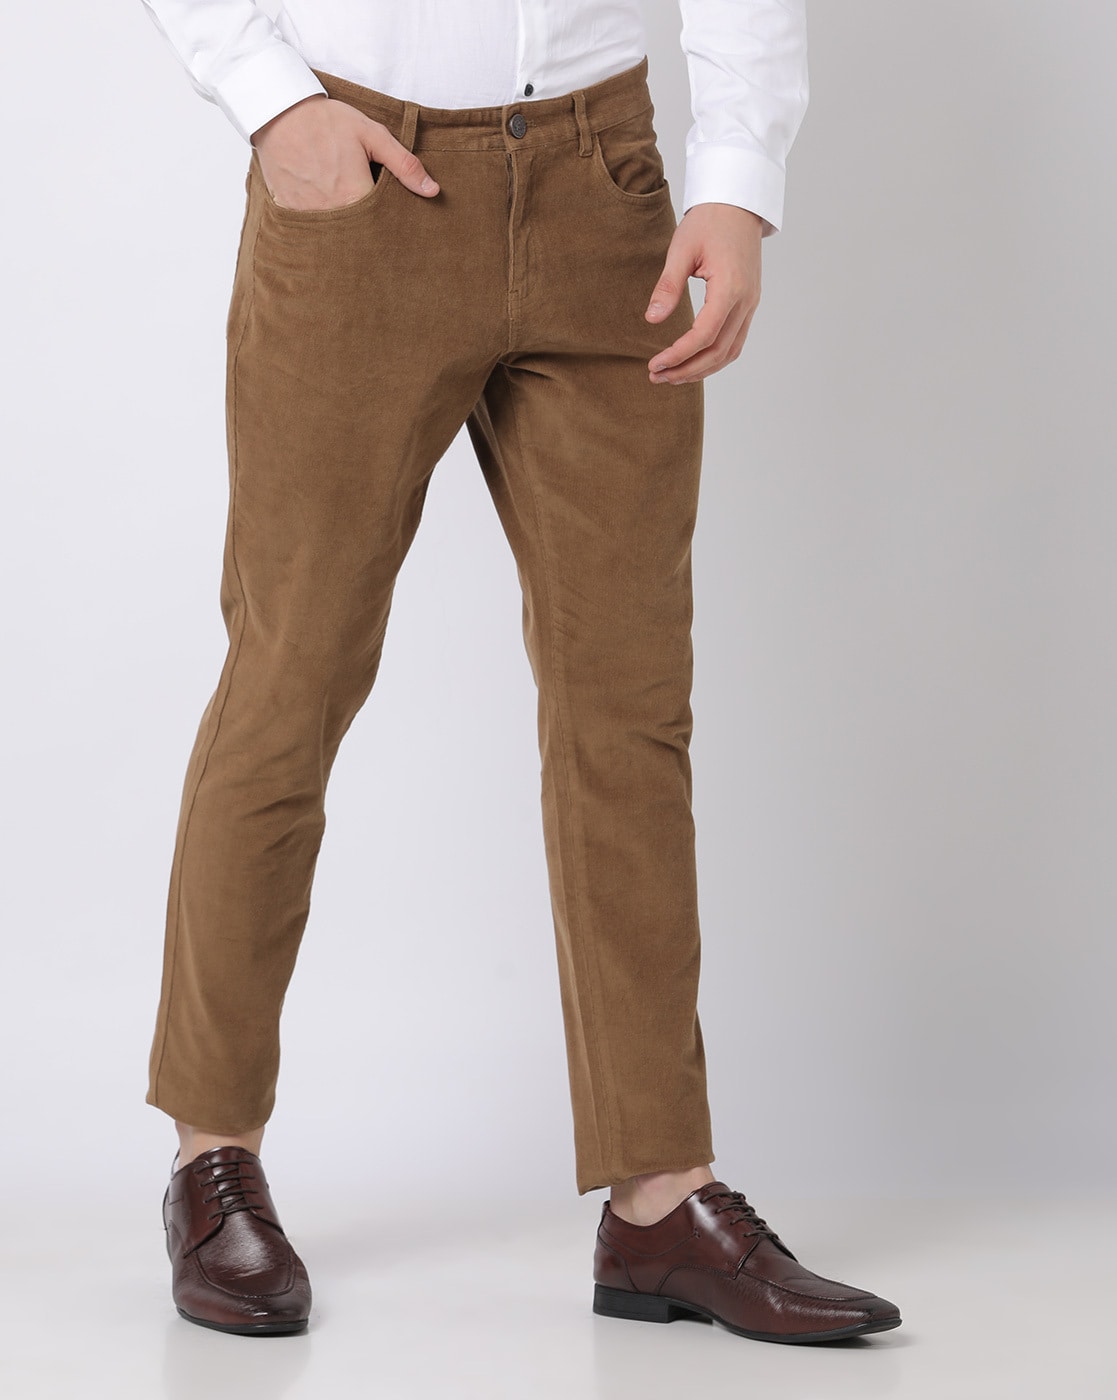 Theo 1322 men's trousers - Brown - Buy online at NN.07®